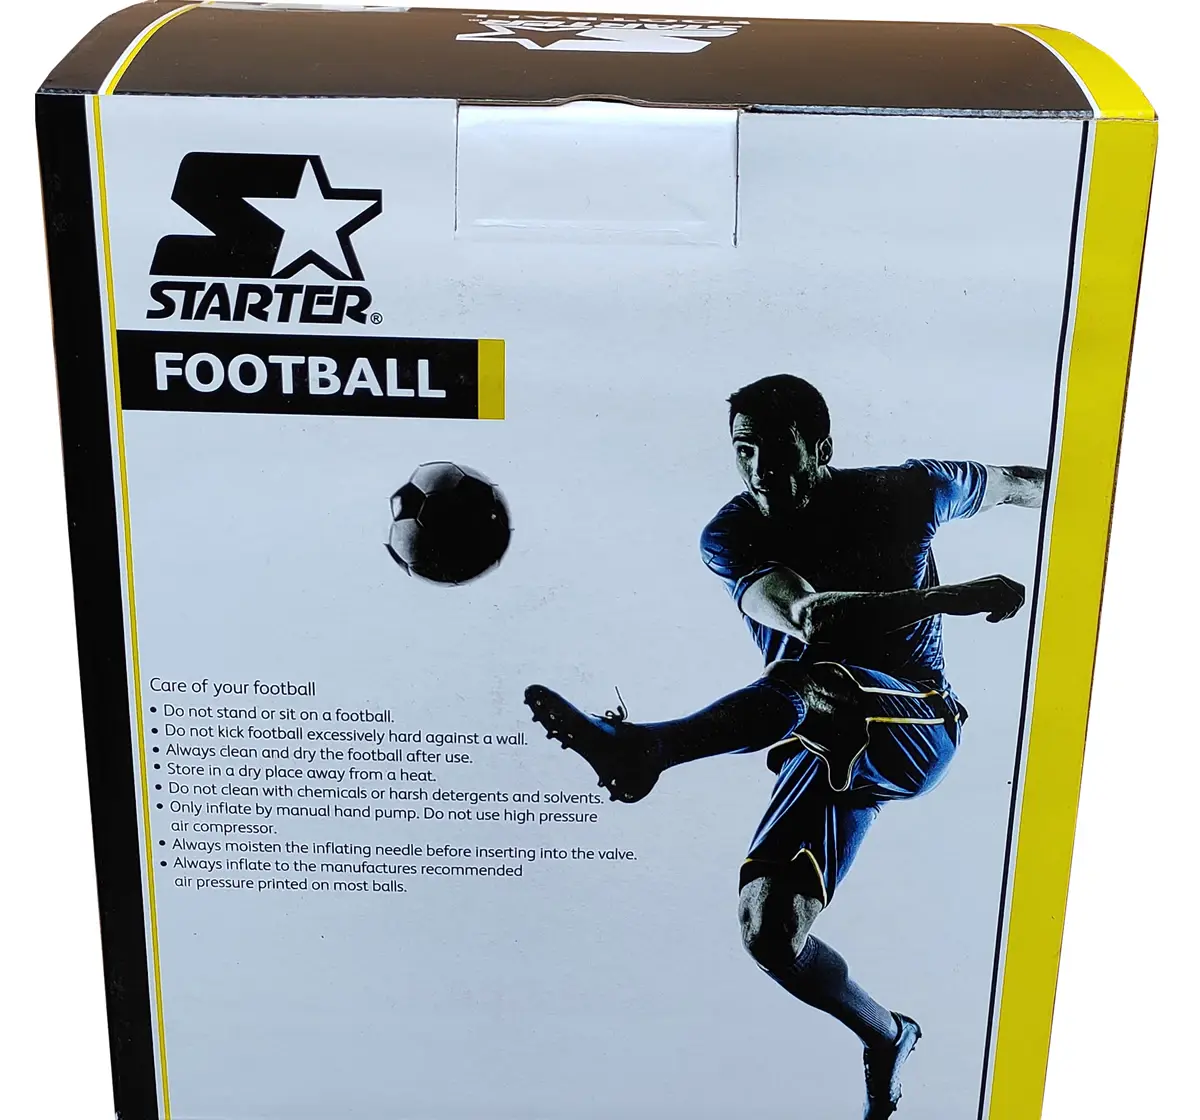 Starter Final Kick Football L2  Size 5 - Blue